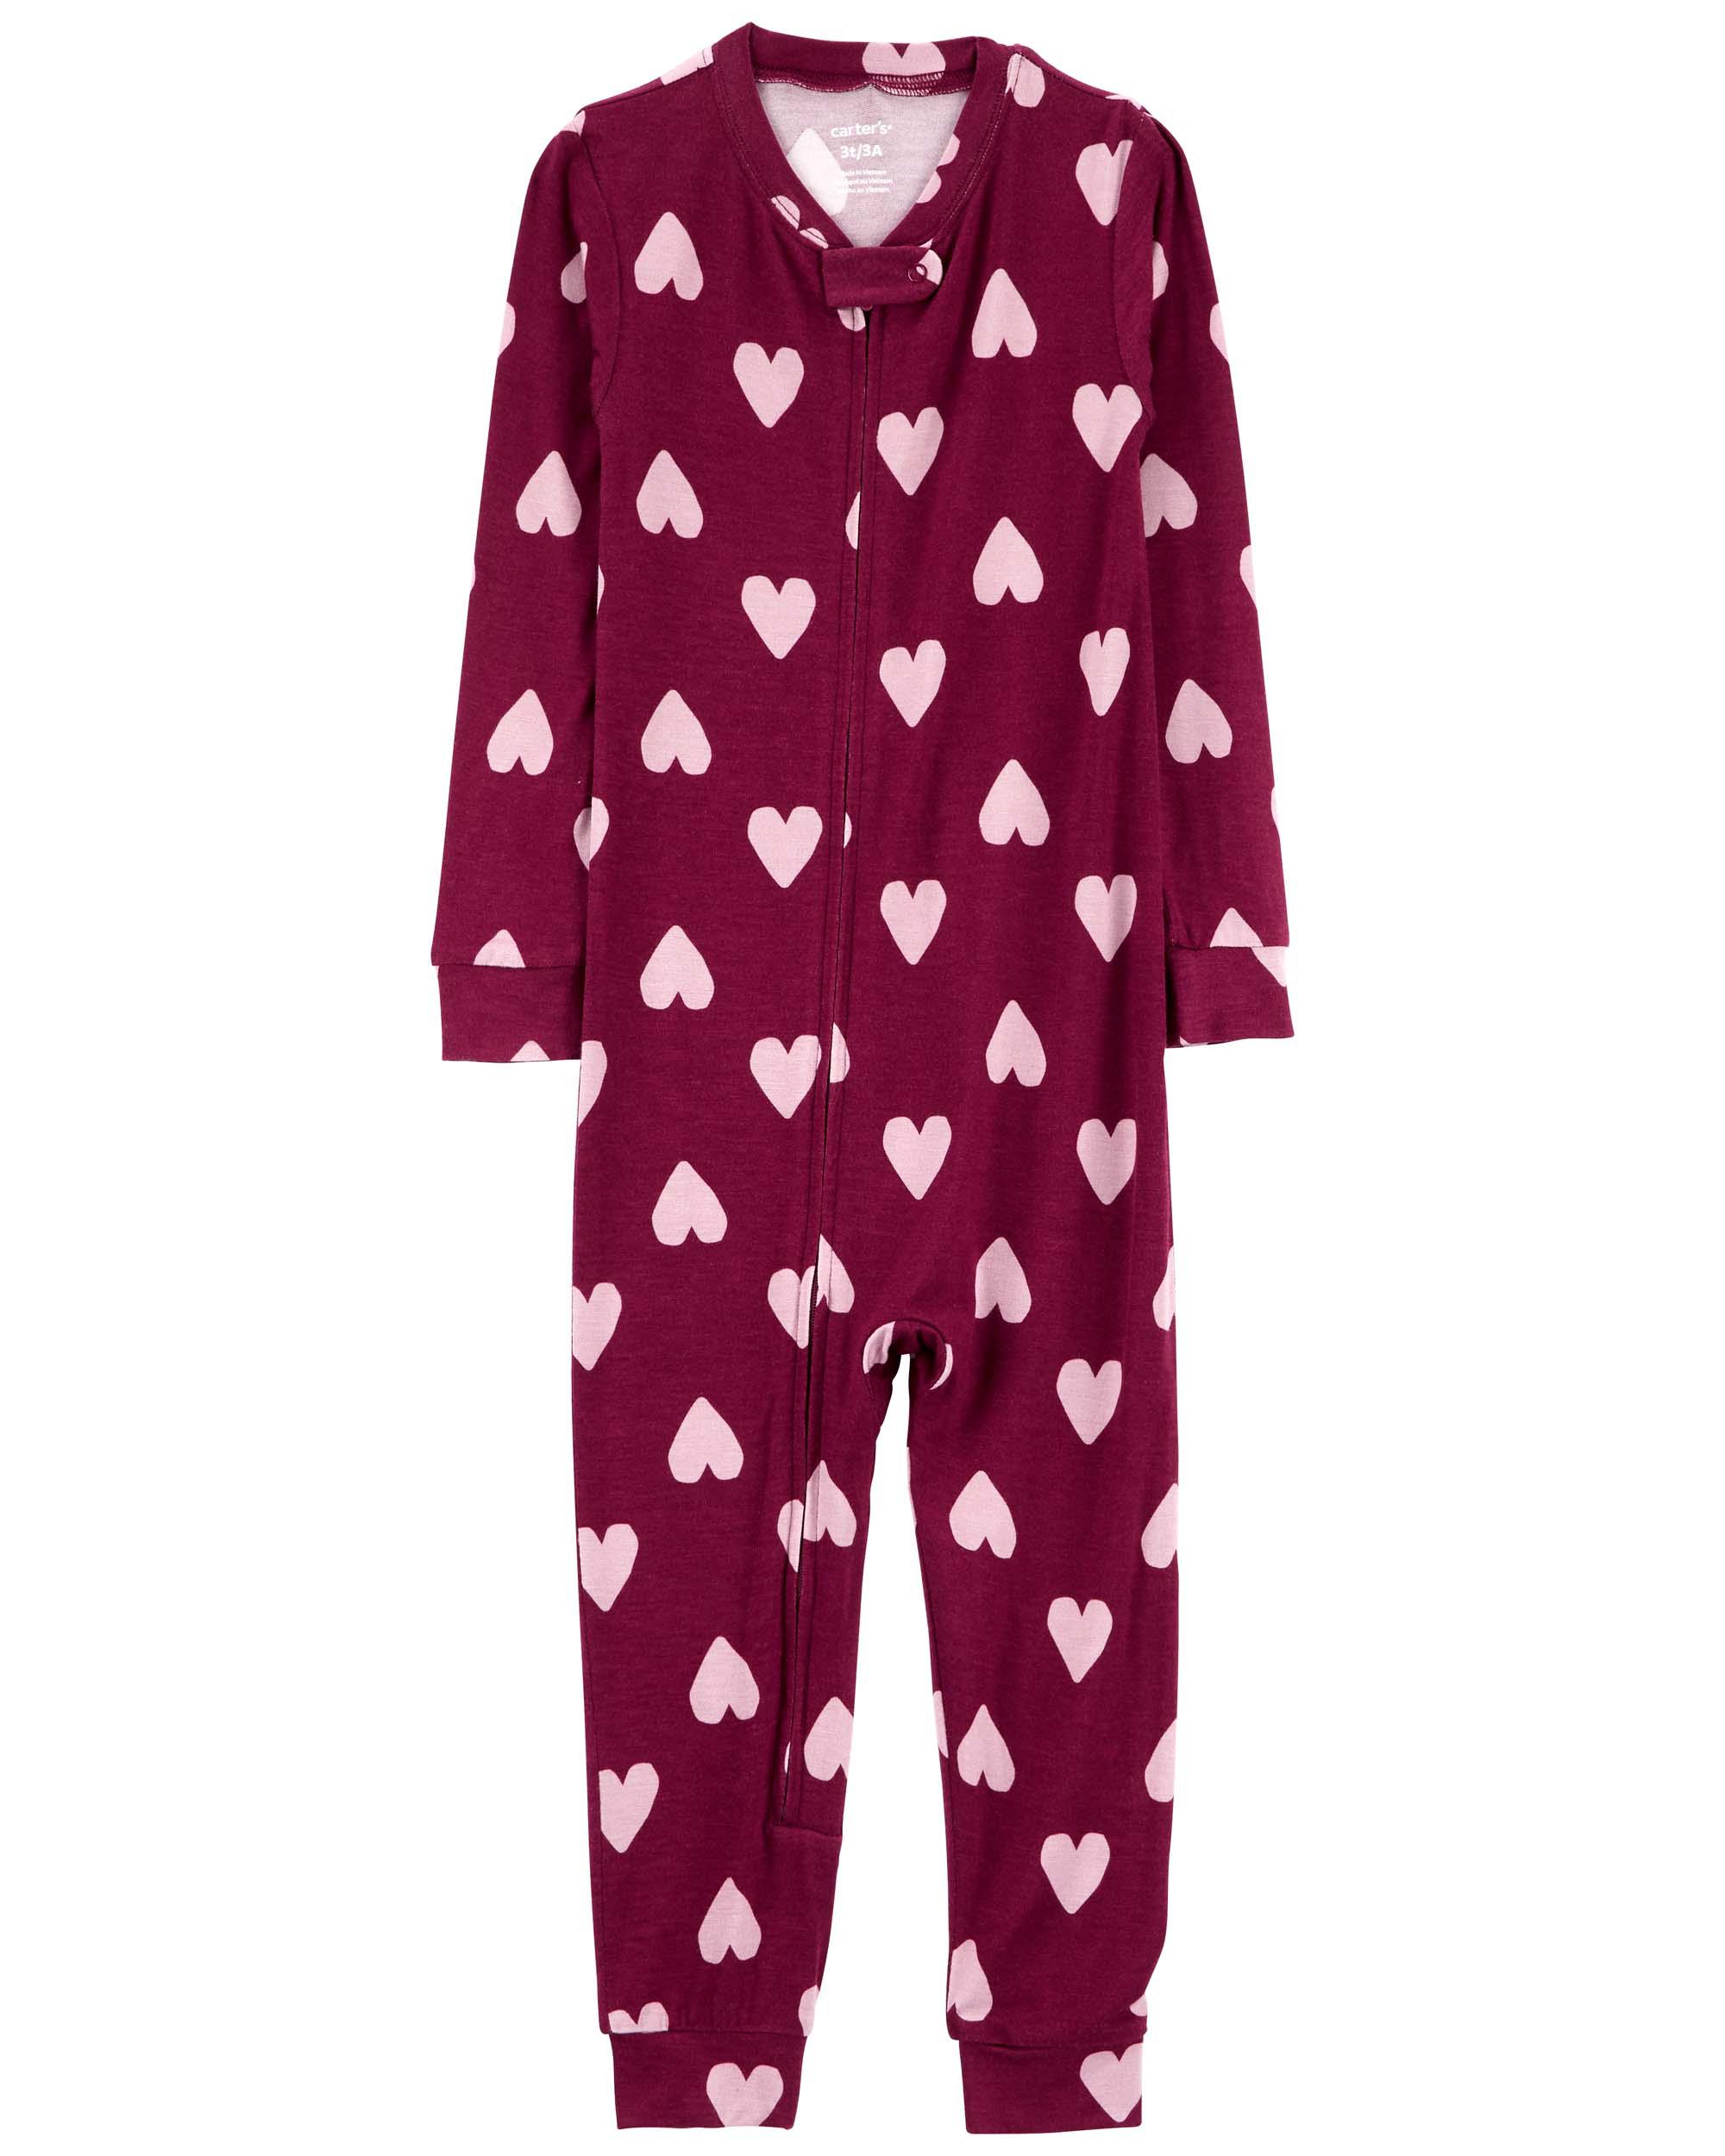 Toddler 1-Piece PurelySoft Heart Print Pyjamas